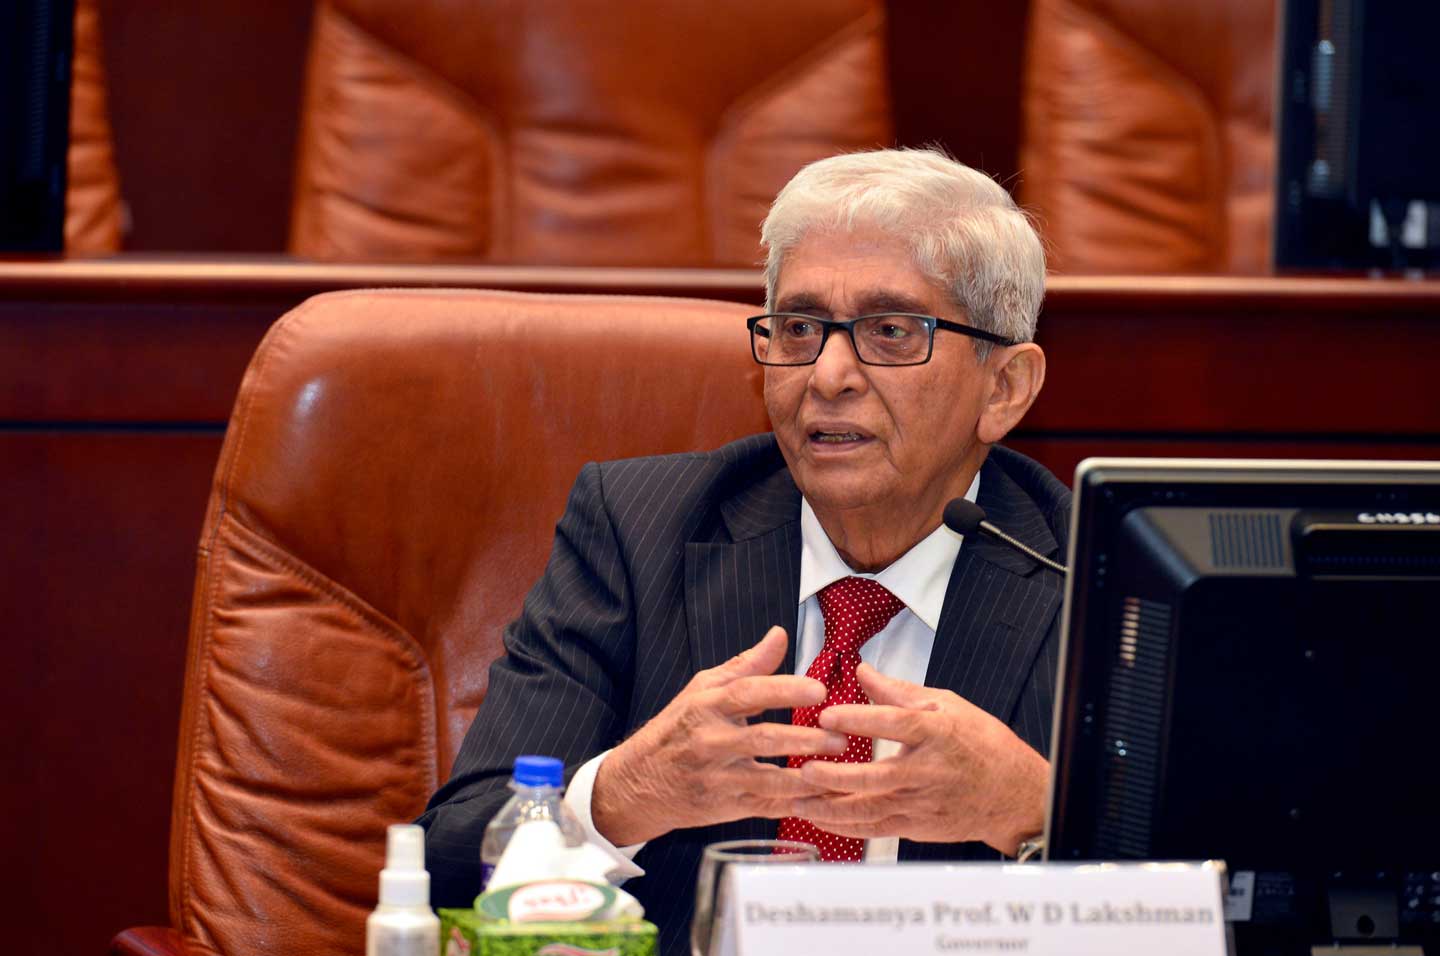 Sri Lanka Central Bank Governor Prof. W D Lakshman